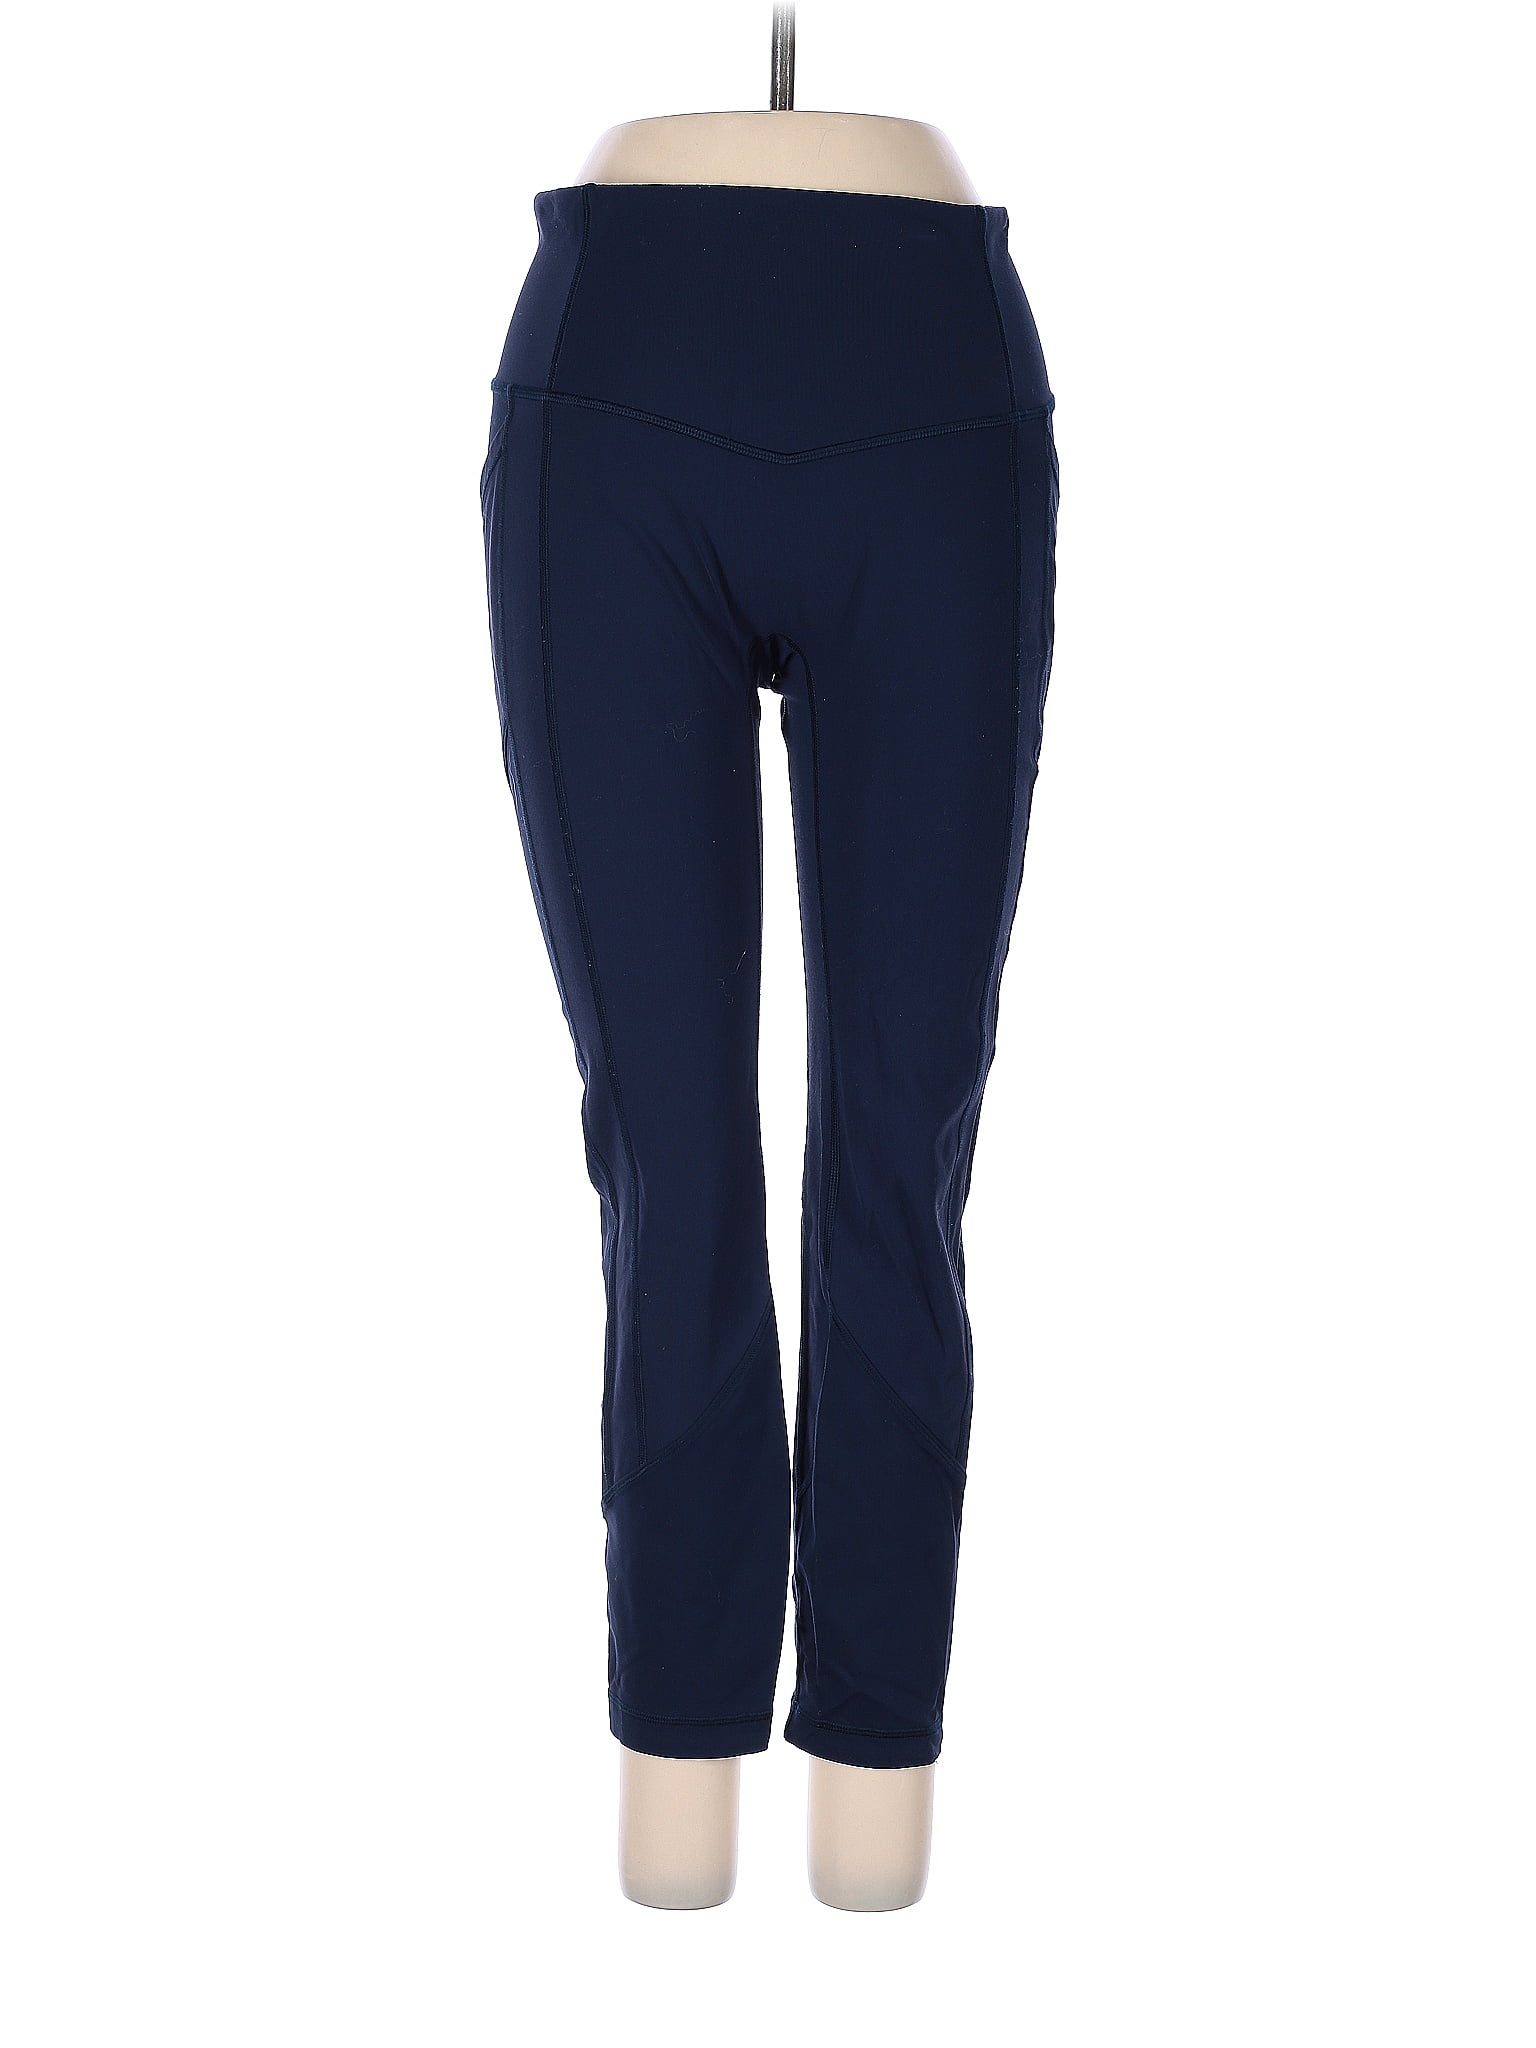 Lululemon Athletica Blue Active Pants Size 4 - 53% off | thredUP